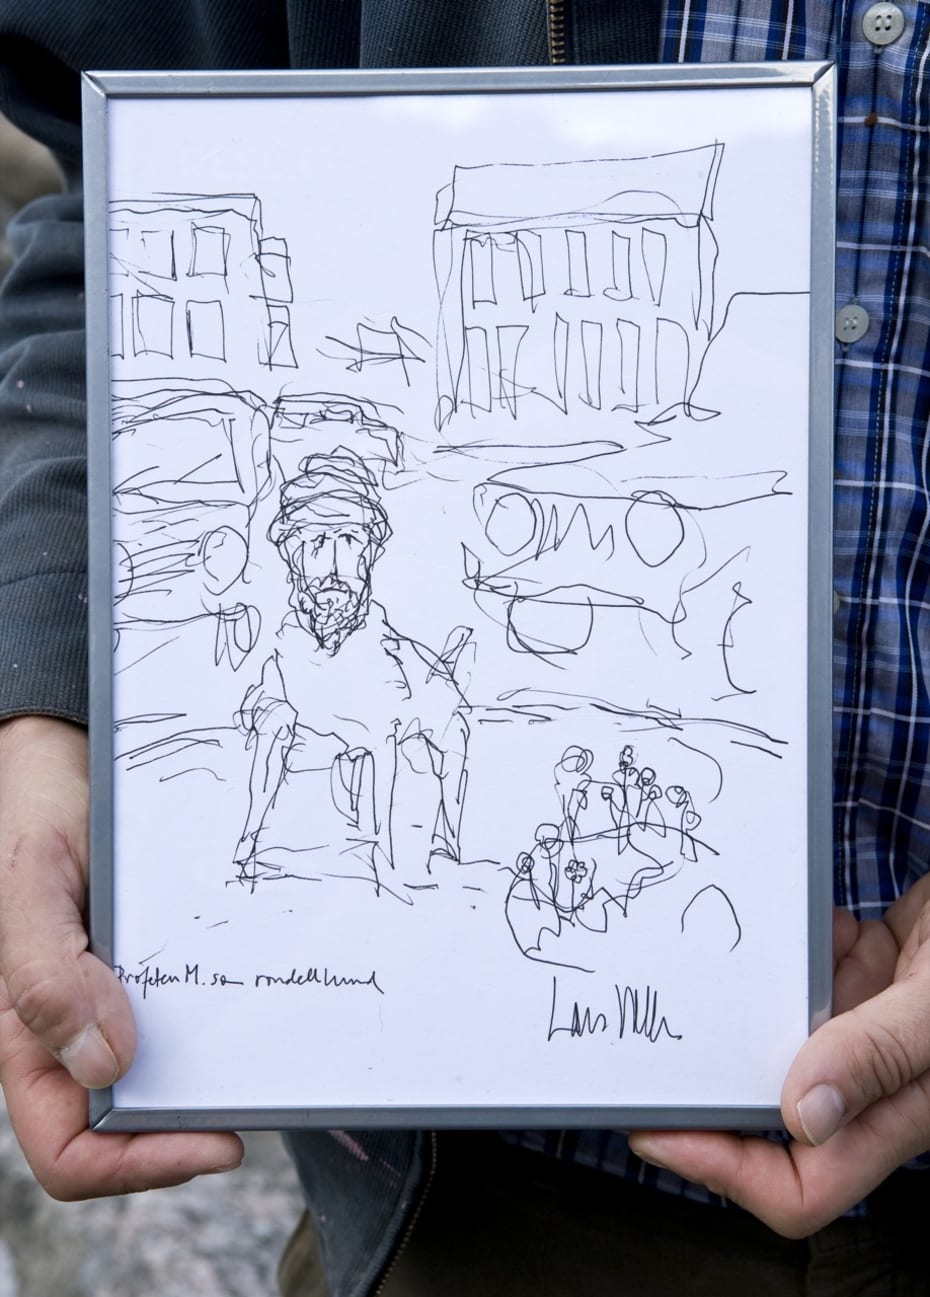 Kunstner og kunstprofessor Lars Vilks var lørdag på deltagerlisten ved arrangementet på Østerbro. Vilks tegnede i 2007 profeten Muhammed som hund, og han har siden levet under politibeskyttelse.